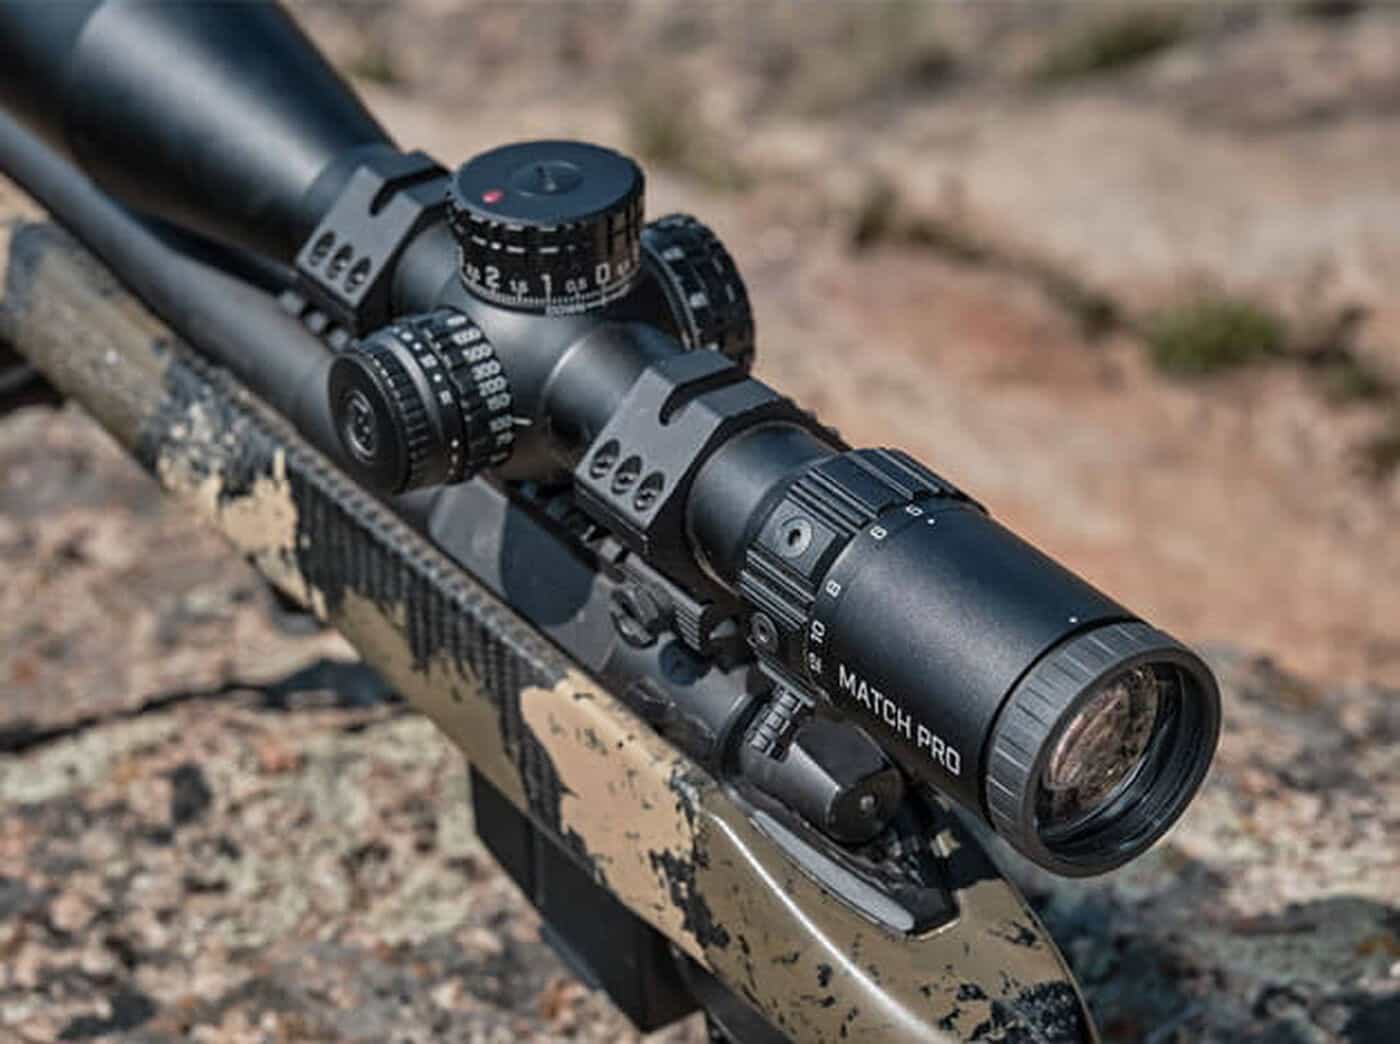 Detail of Match Pro ED Riflescope mounted on a rifle